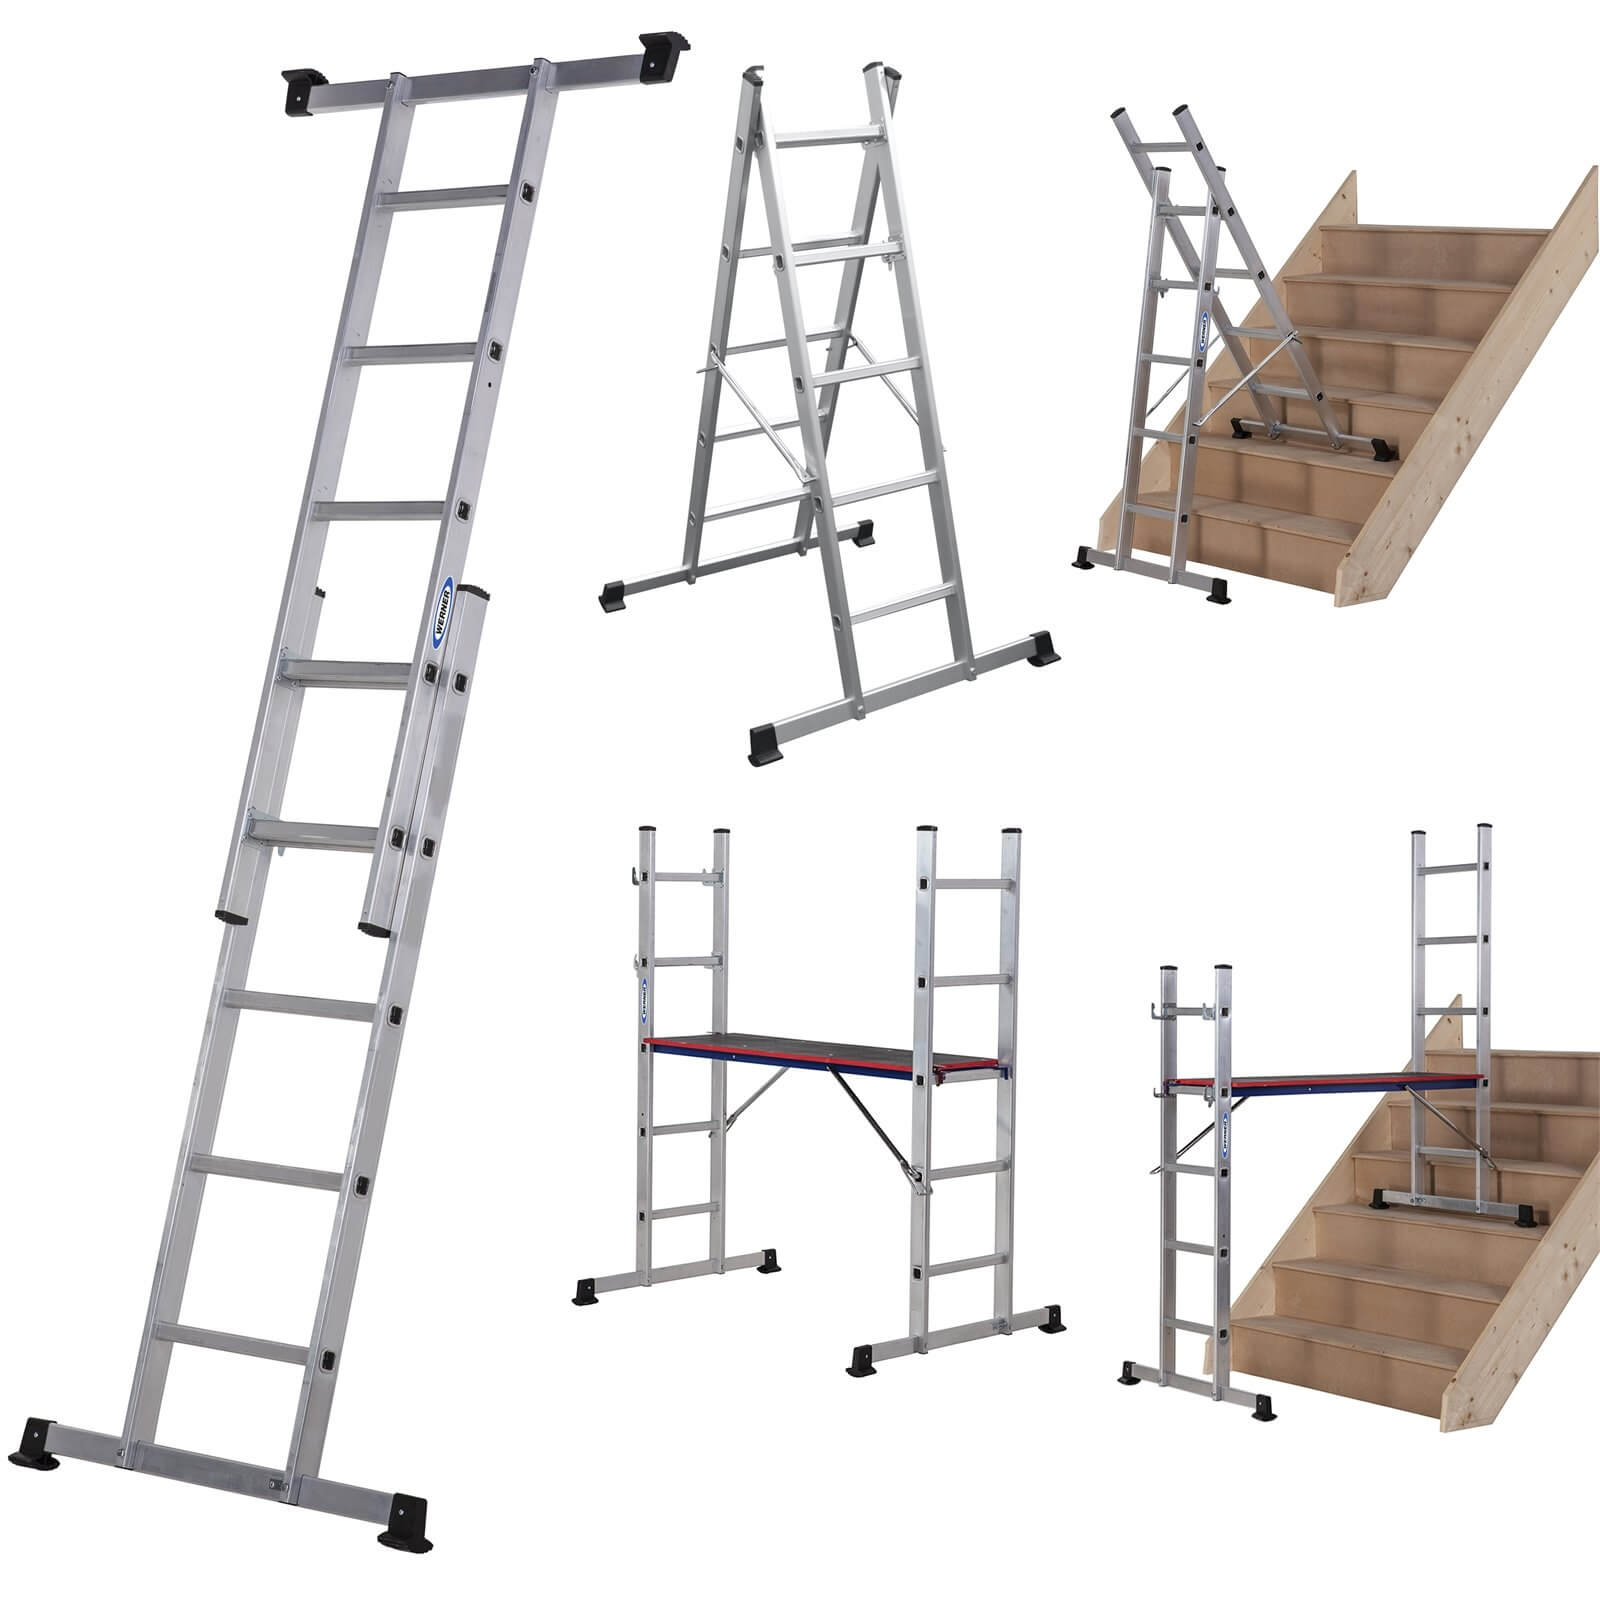 Werner Combination Ladder - 5 in 1 with Platform